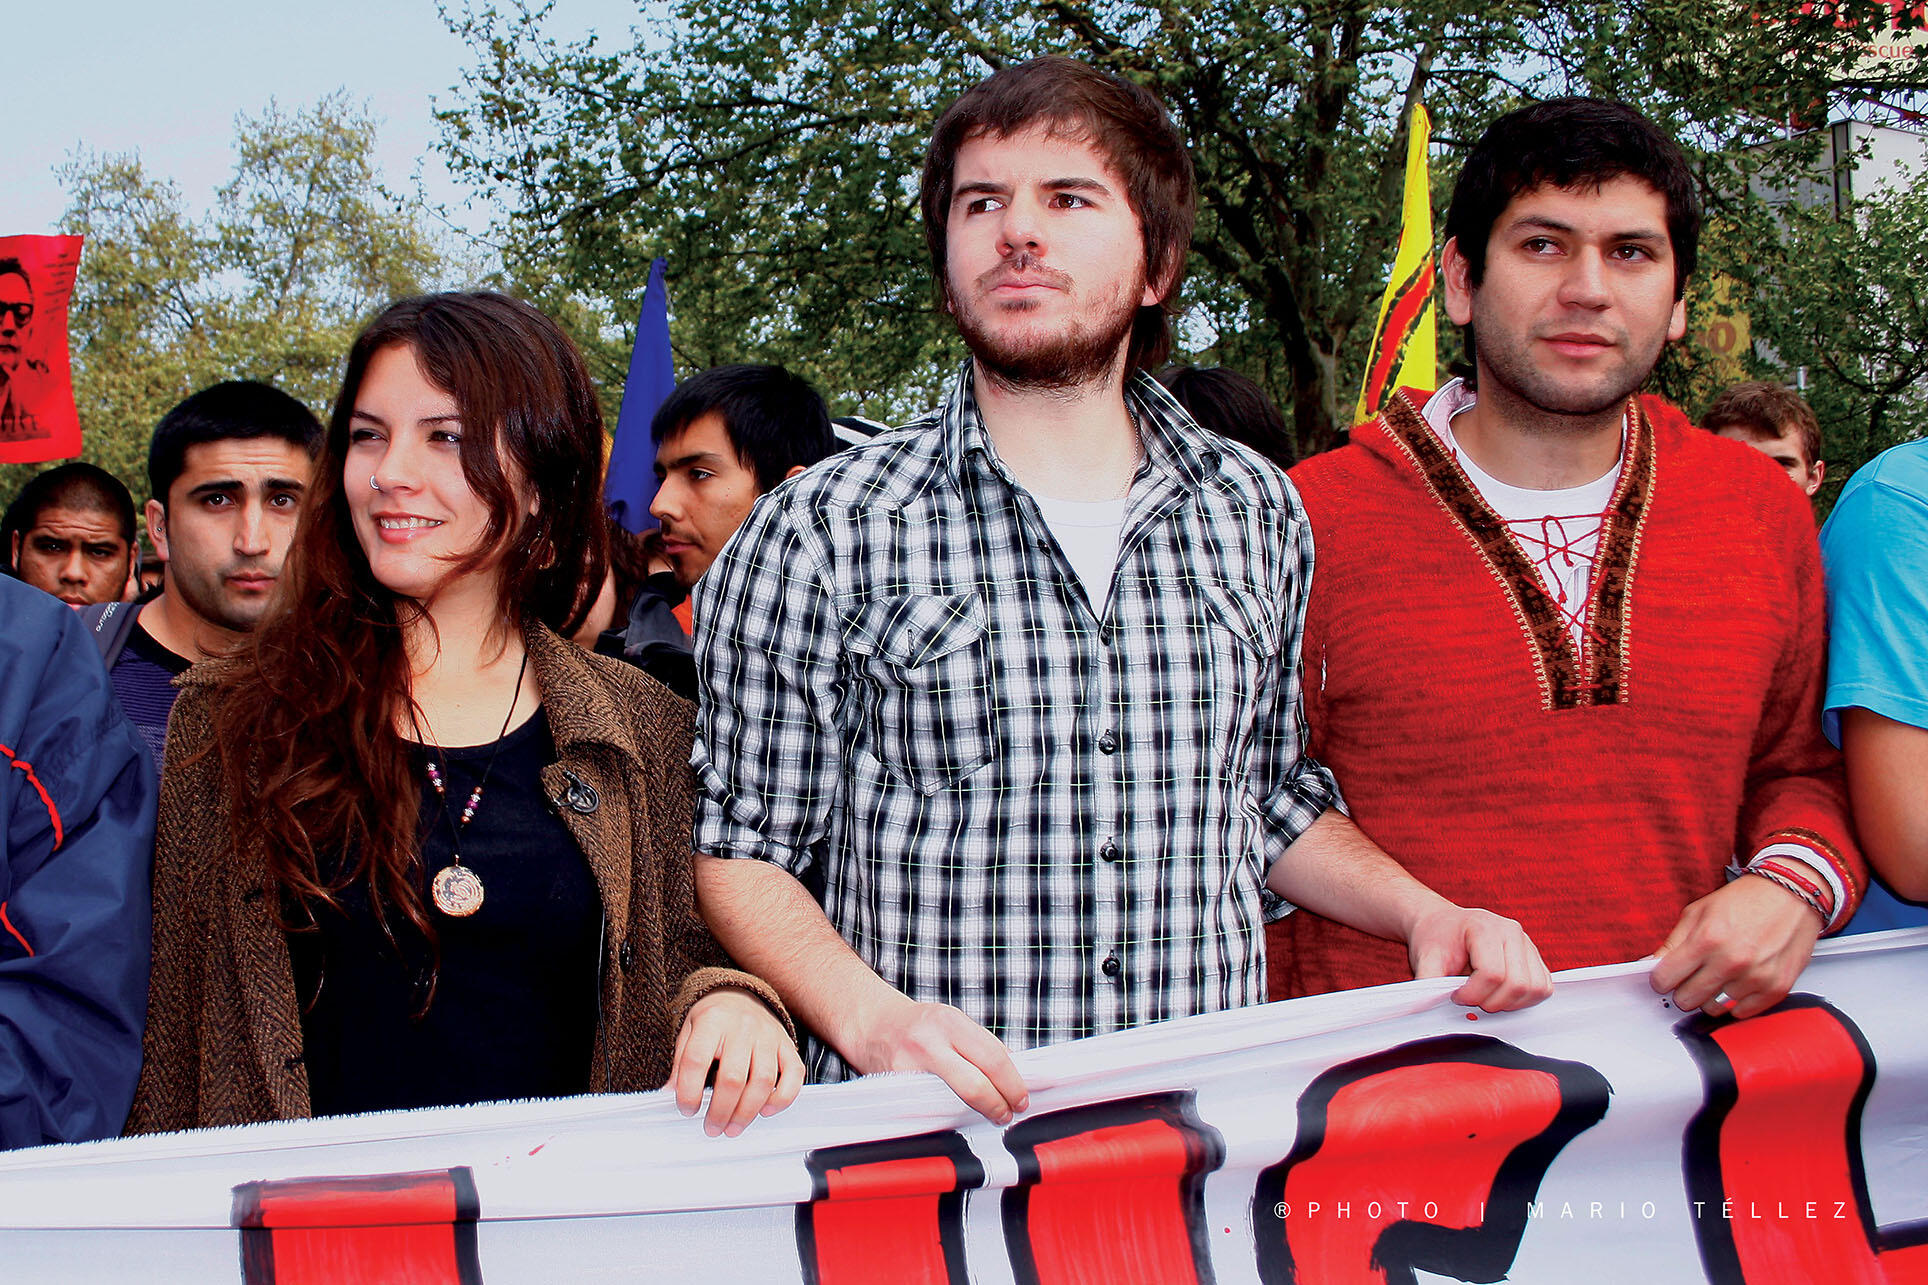  Camila Vallejo, Giorgio Jackson, and Camilo Ballesteros, September 2011. (Photo by Mario Tellez Cardemil.)